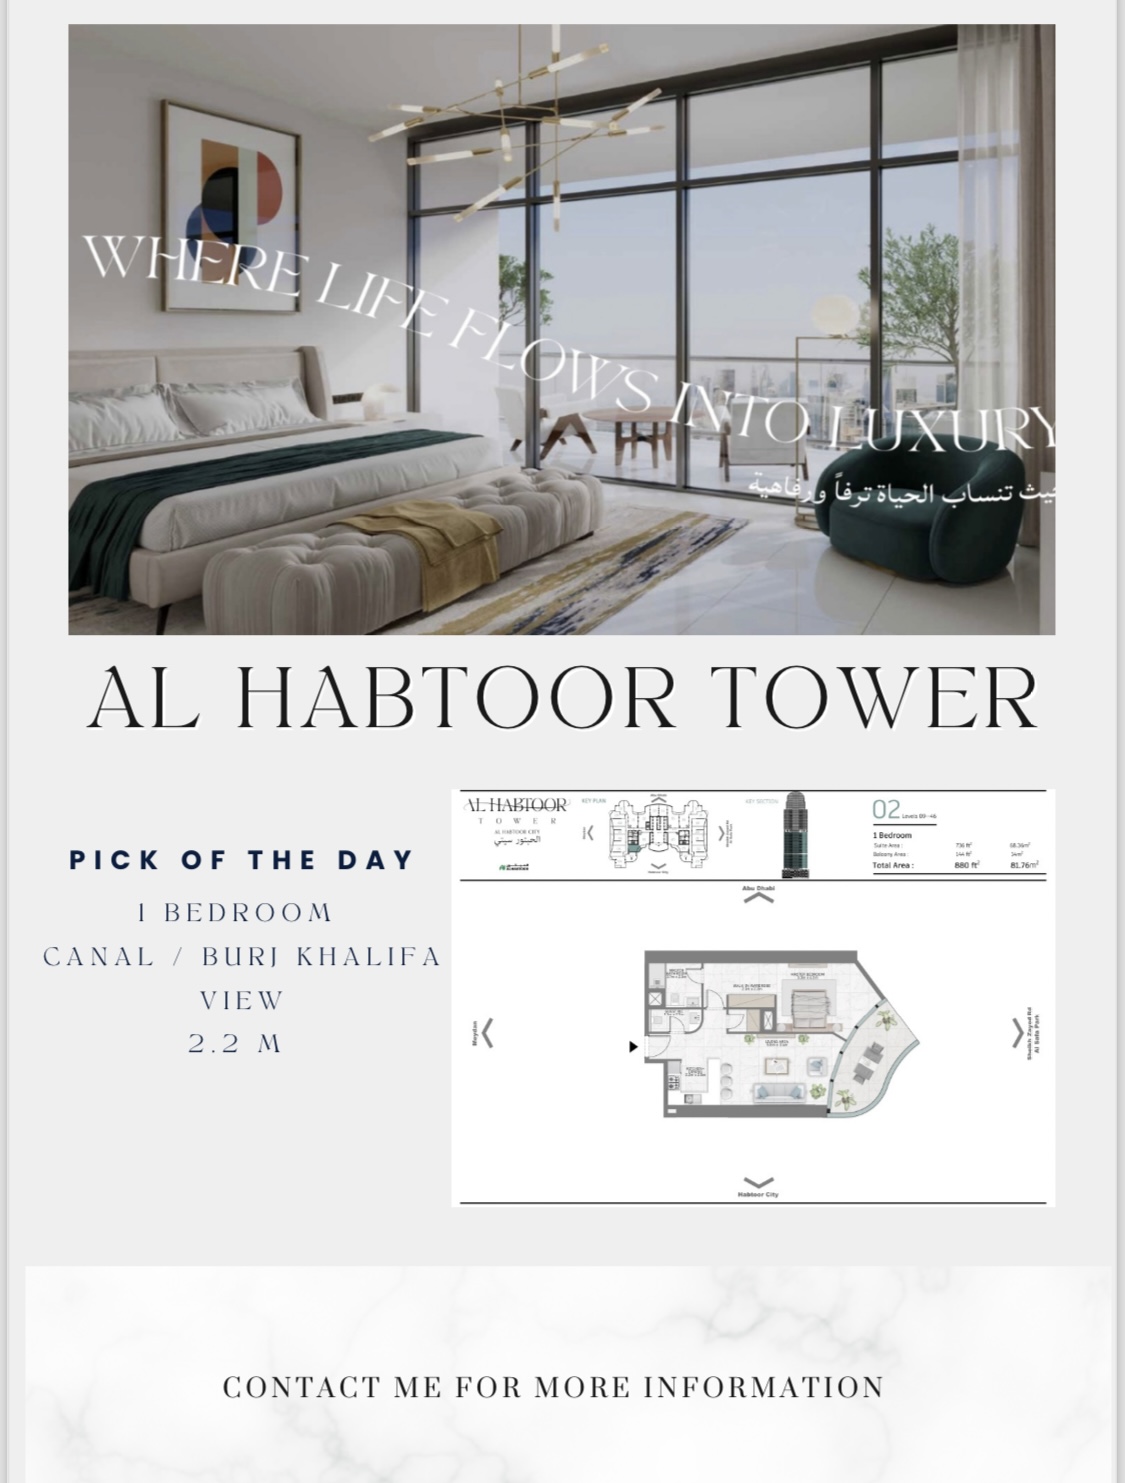 Habtoor Tower in Dubai